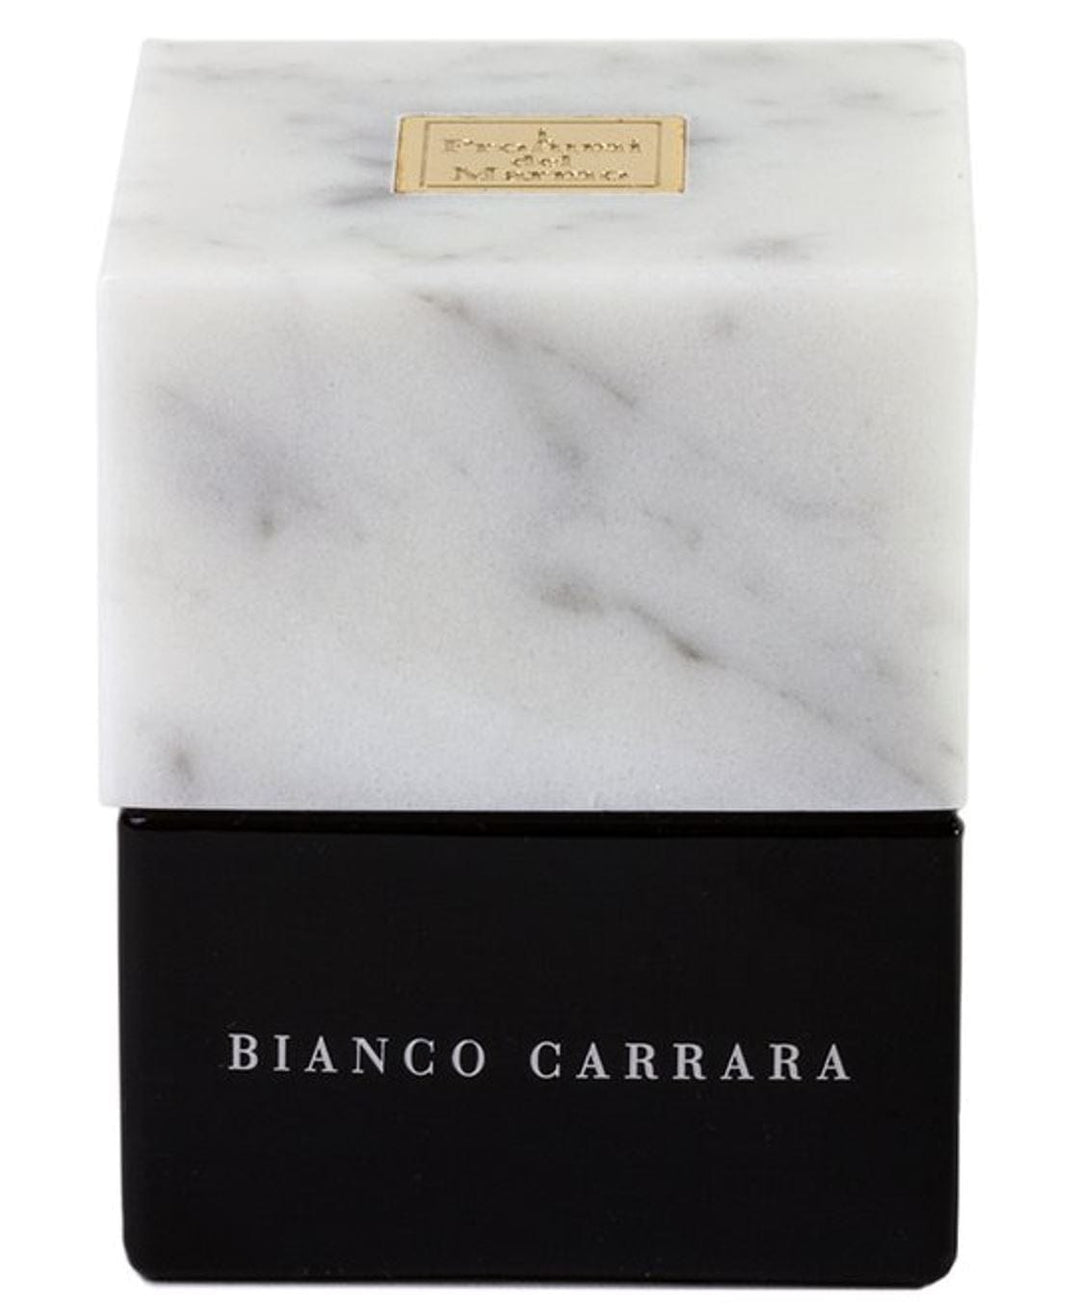 Profumi Del Marmo Perfume & Cologne Profumi del Marmo Bianco Carrara Luxury Eau De Parfum Unisex 50 ml Profumi del Marmo Bianco Carrara Luxury Eau De Parfum 50ml Brand